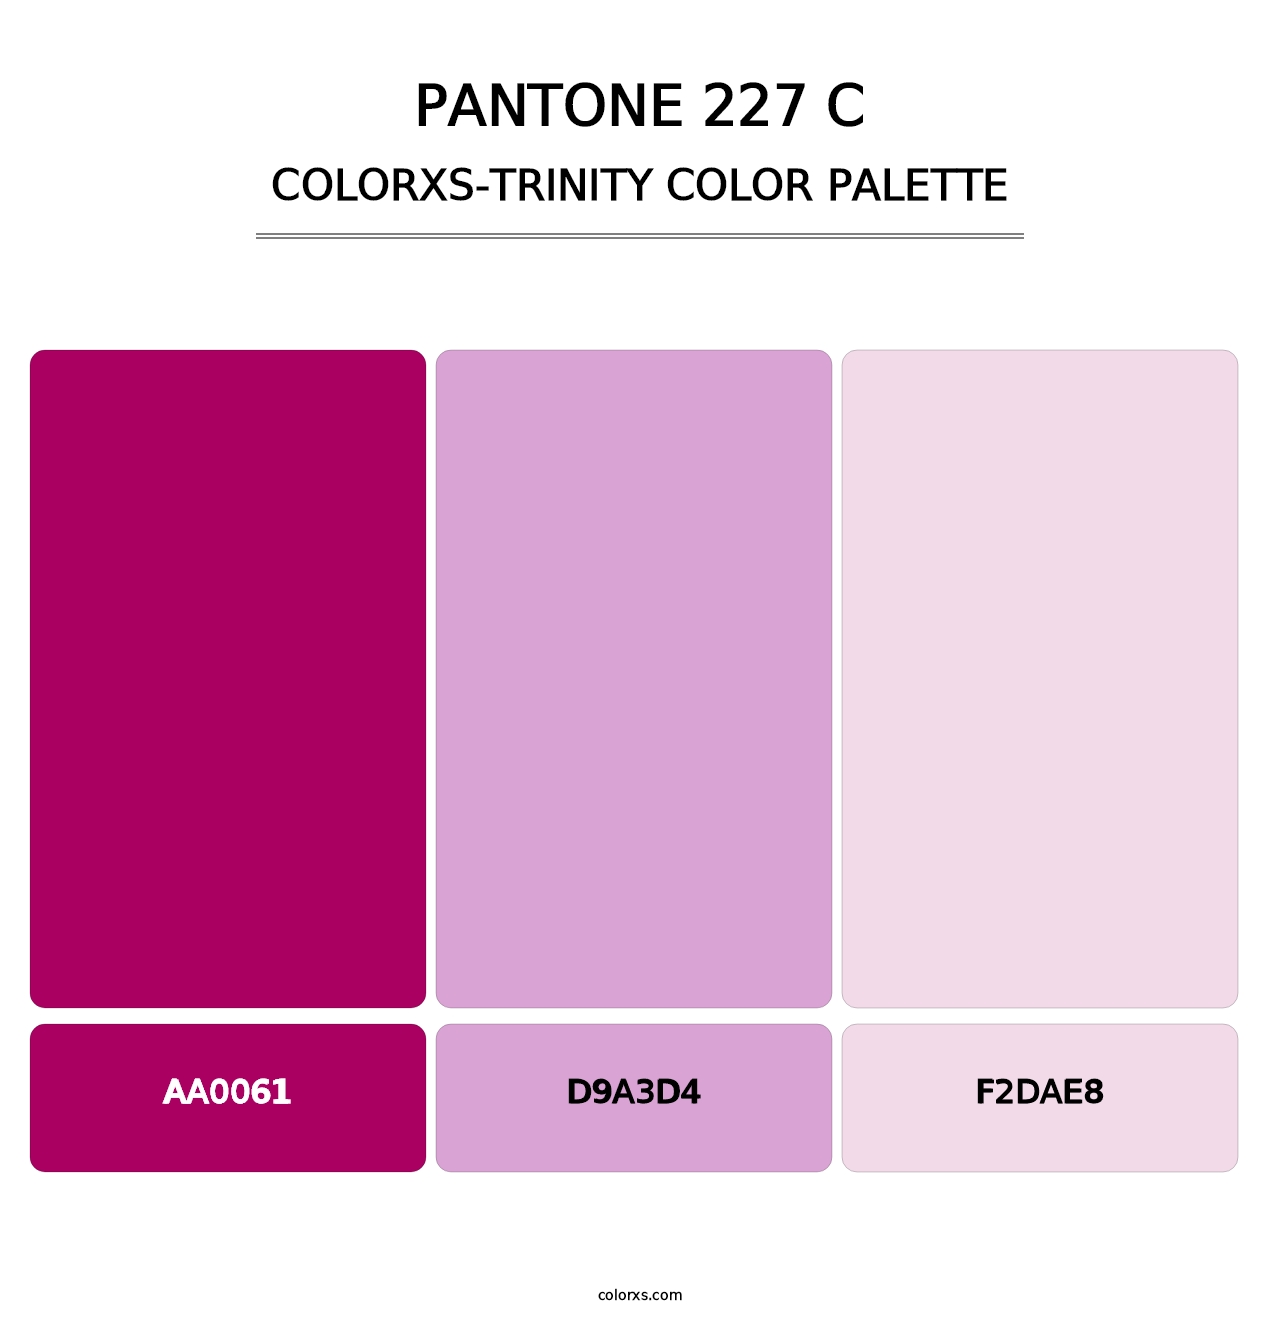 PANTONE 227 C - Colorxs Trinity Palette